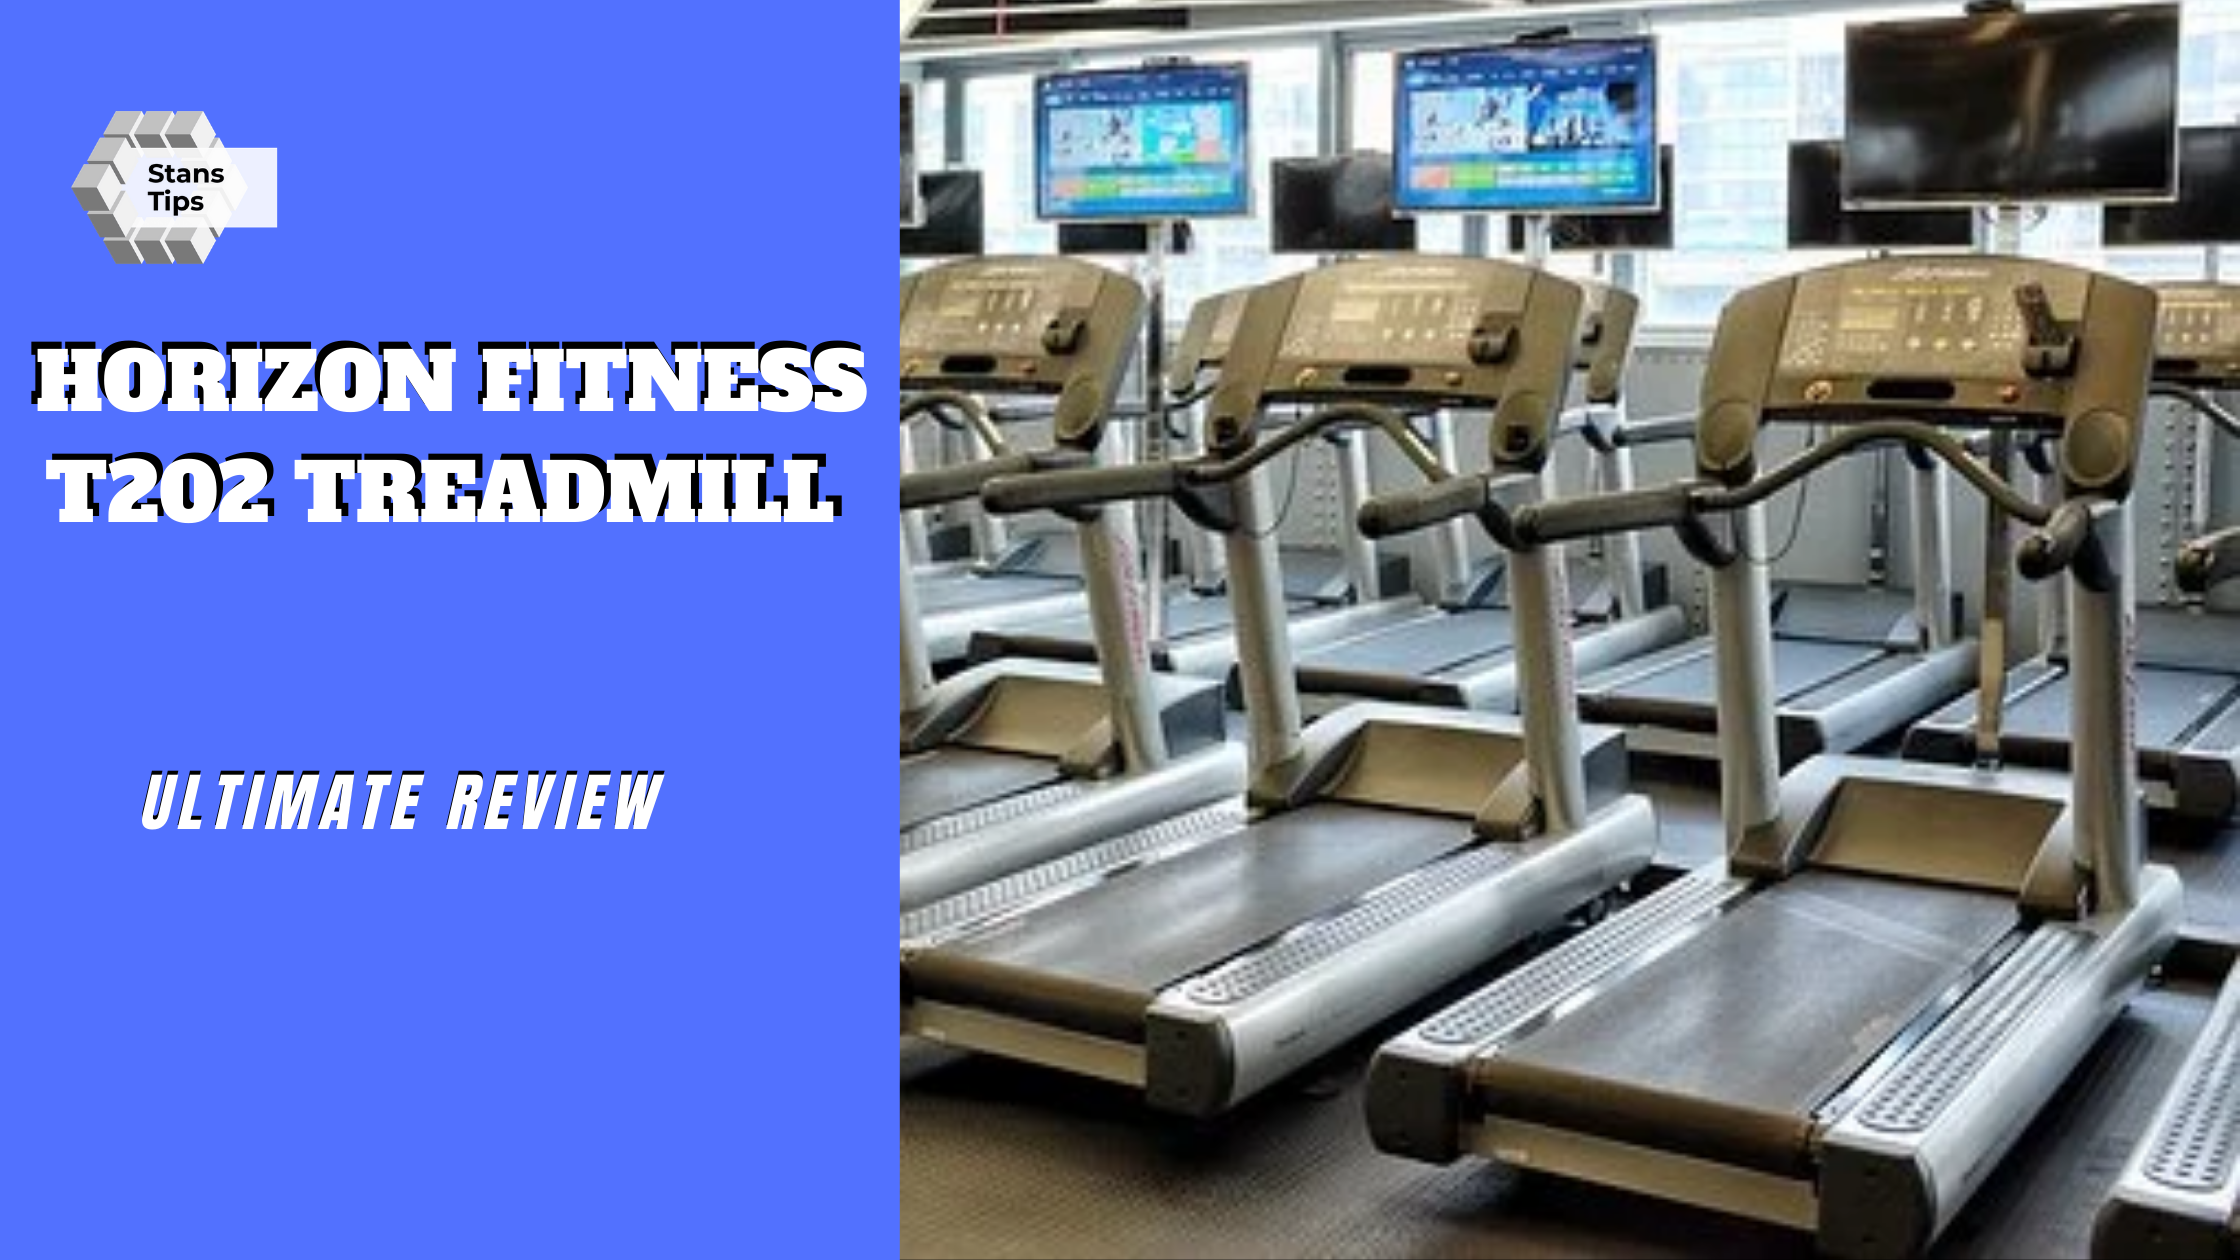 Horizon fitness t202 treadmill Review